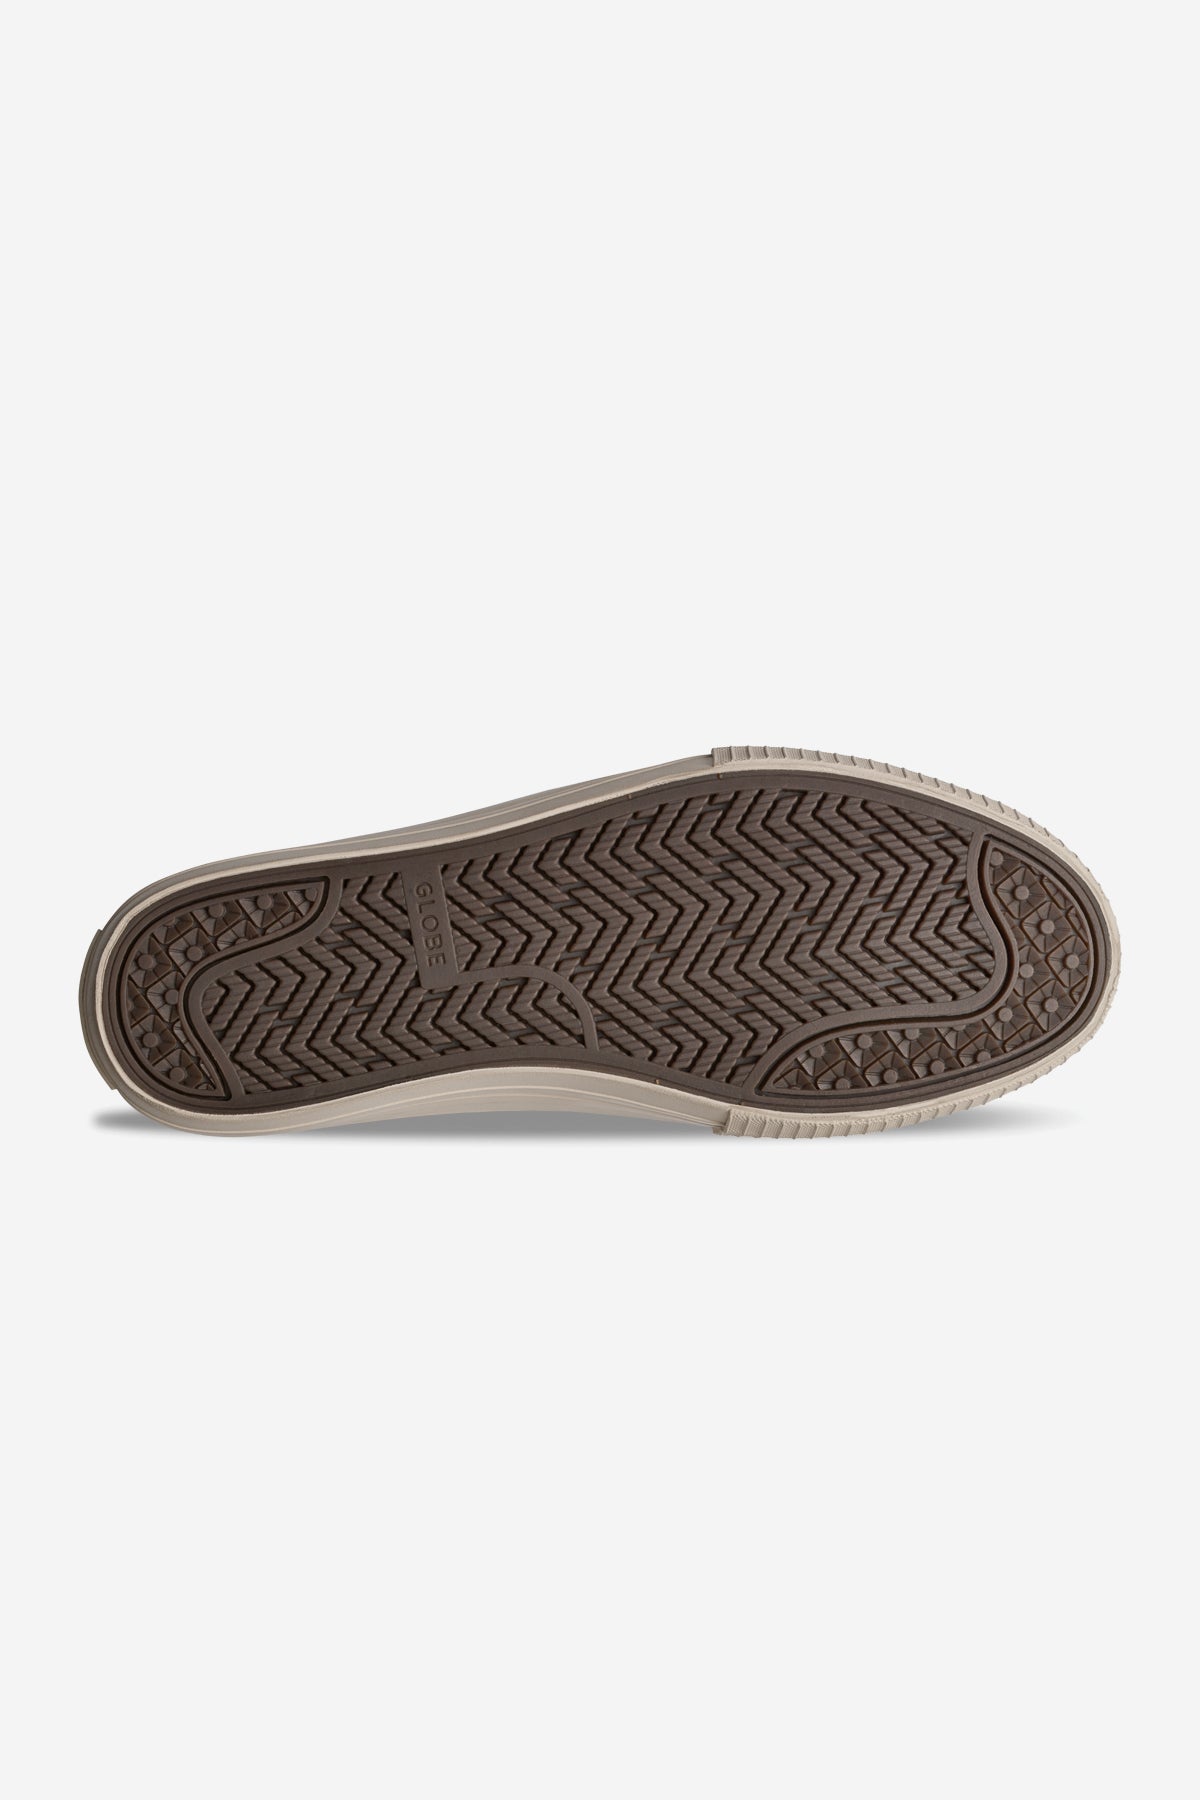 Globe - Gillette - Olive/Creme - skateboard Schuhe